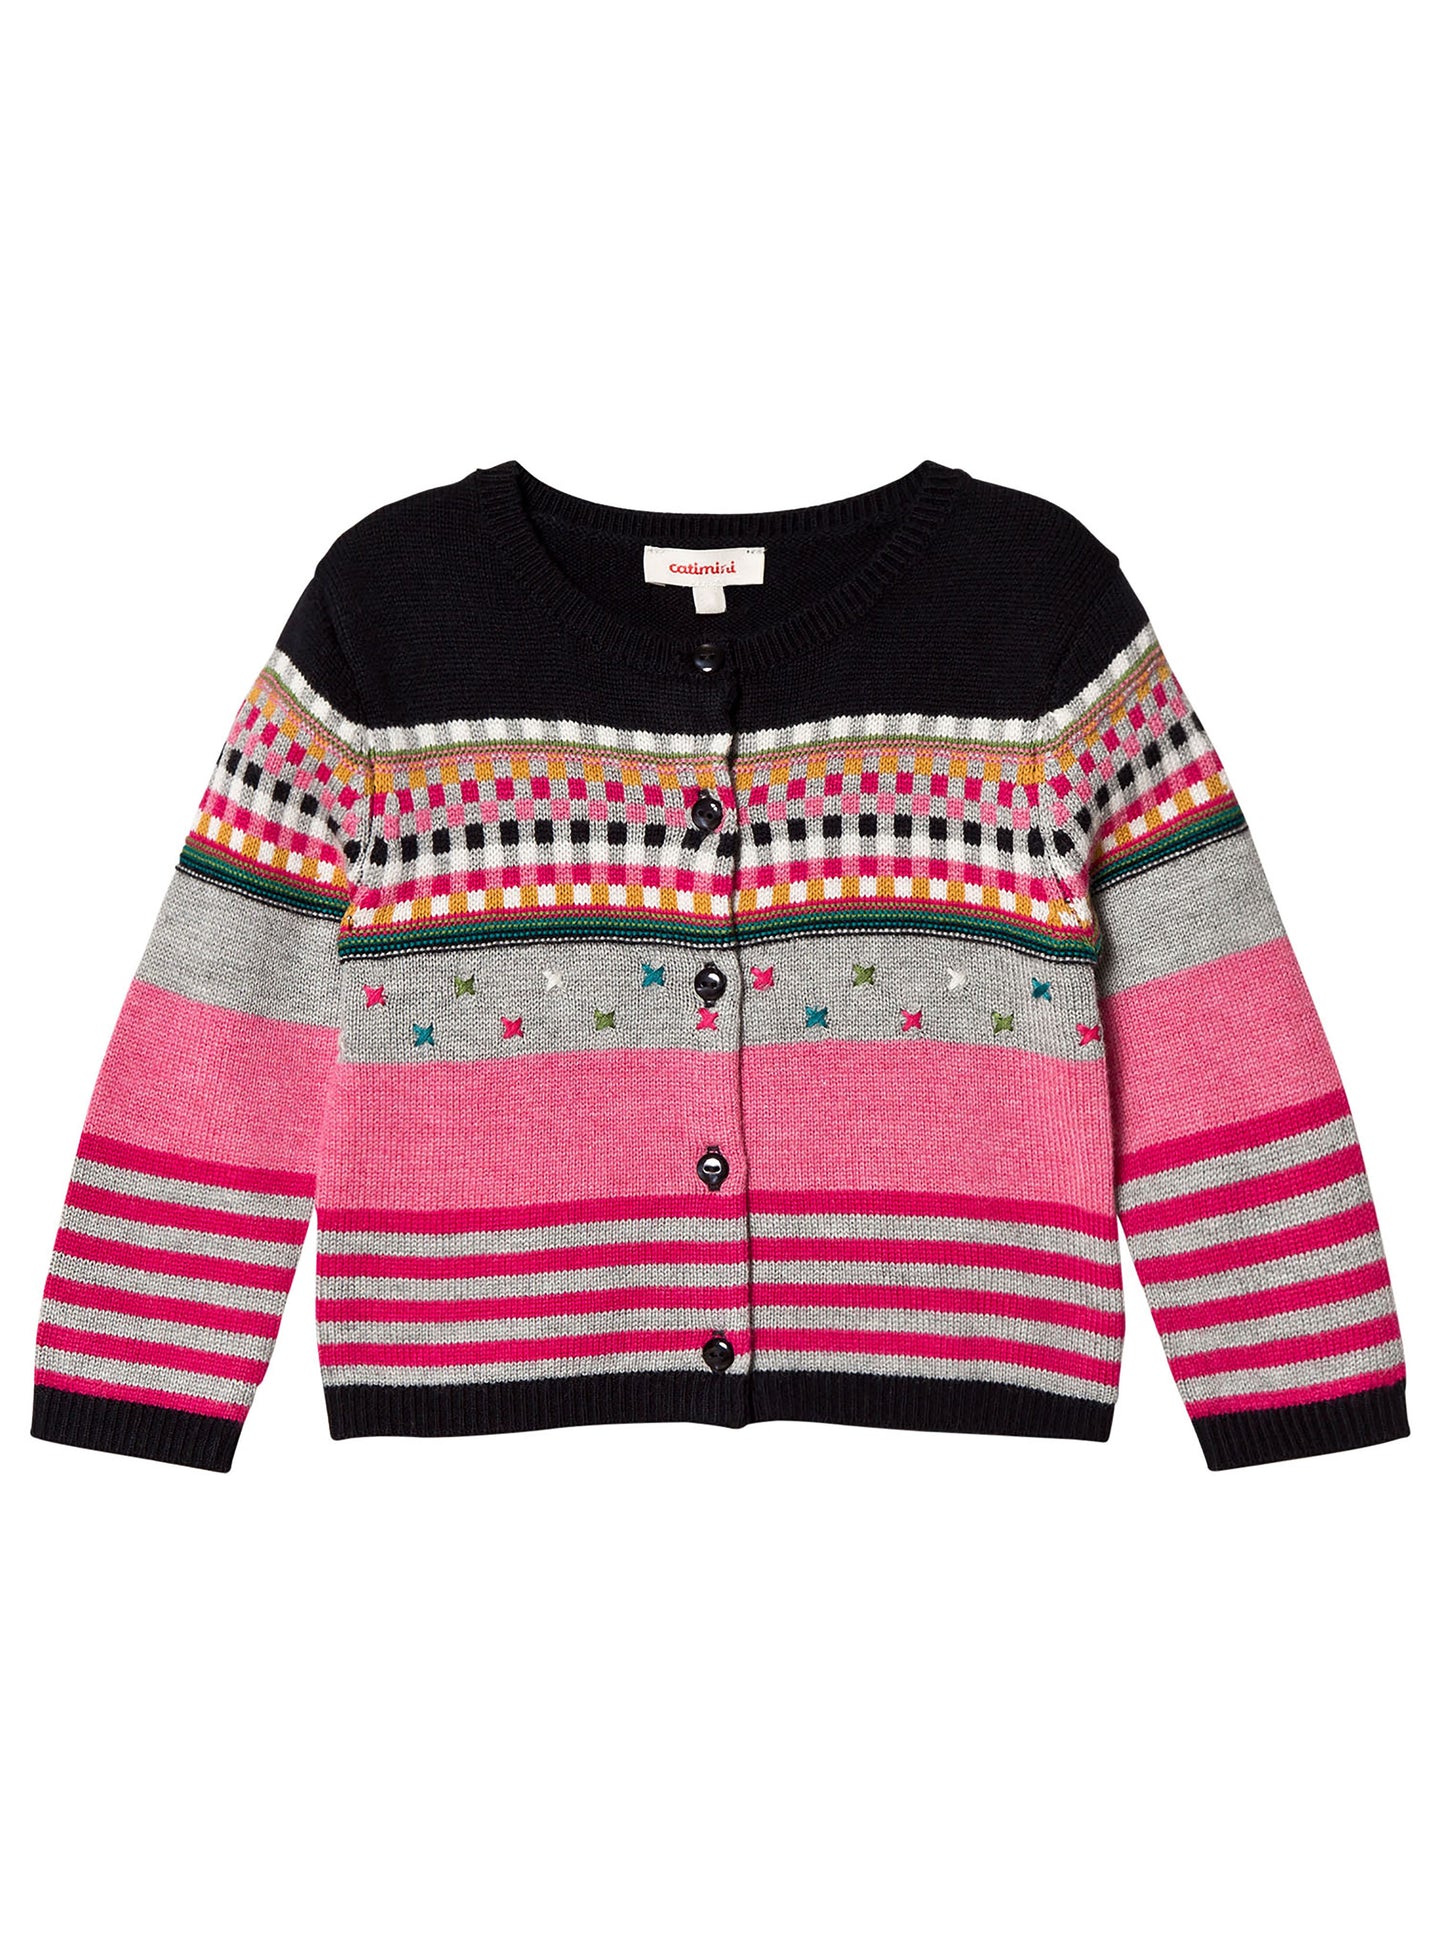 [18-24m] Catimini Girls' Pink & Black Embroidered Cardigan